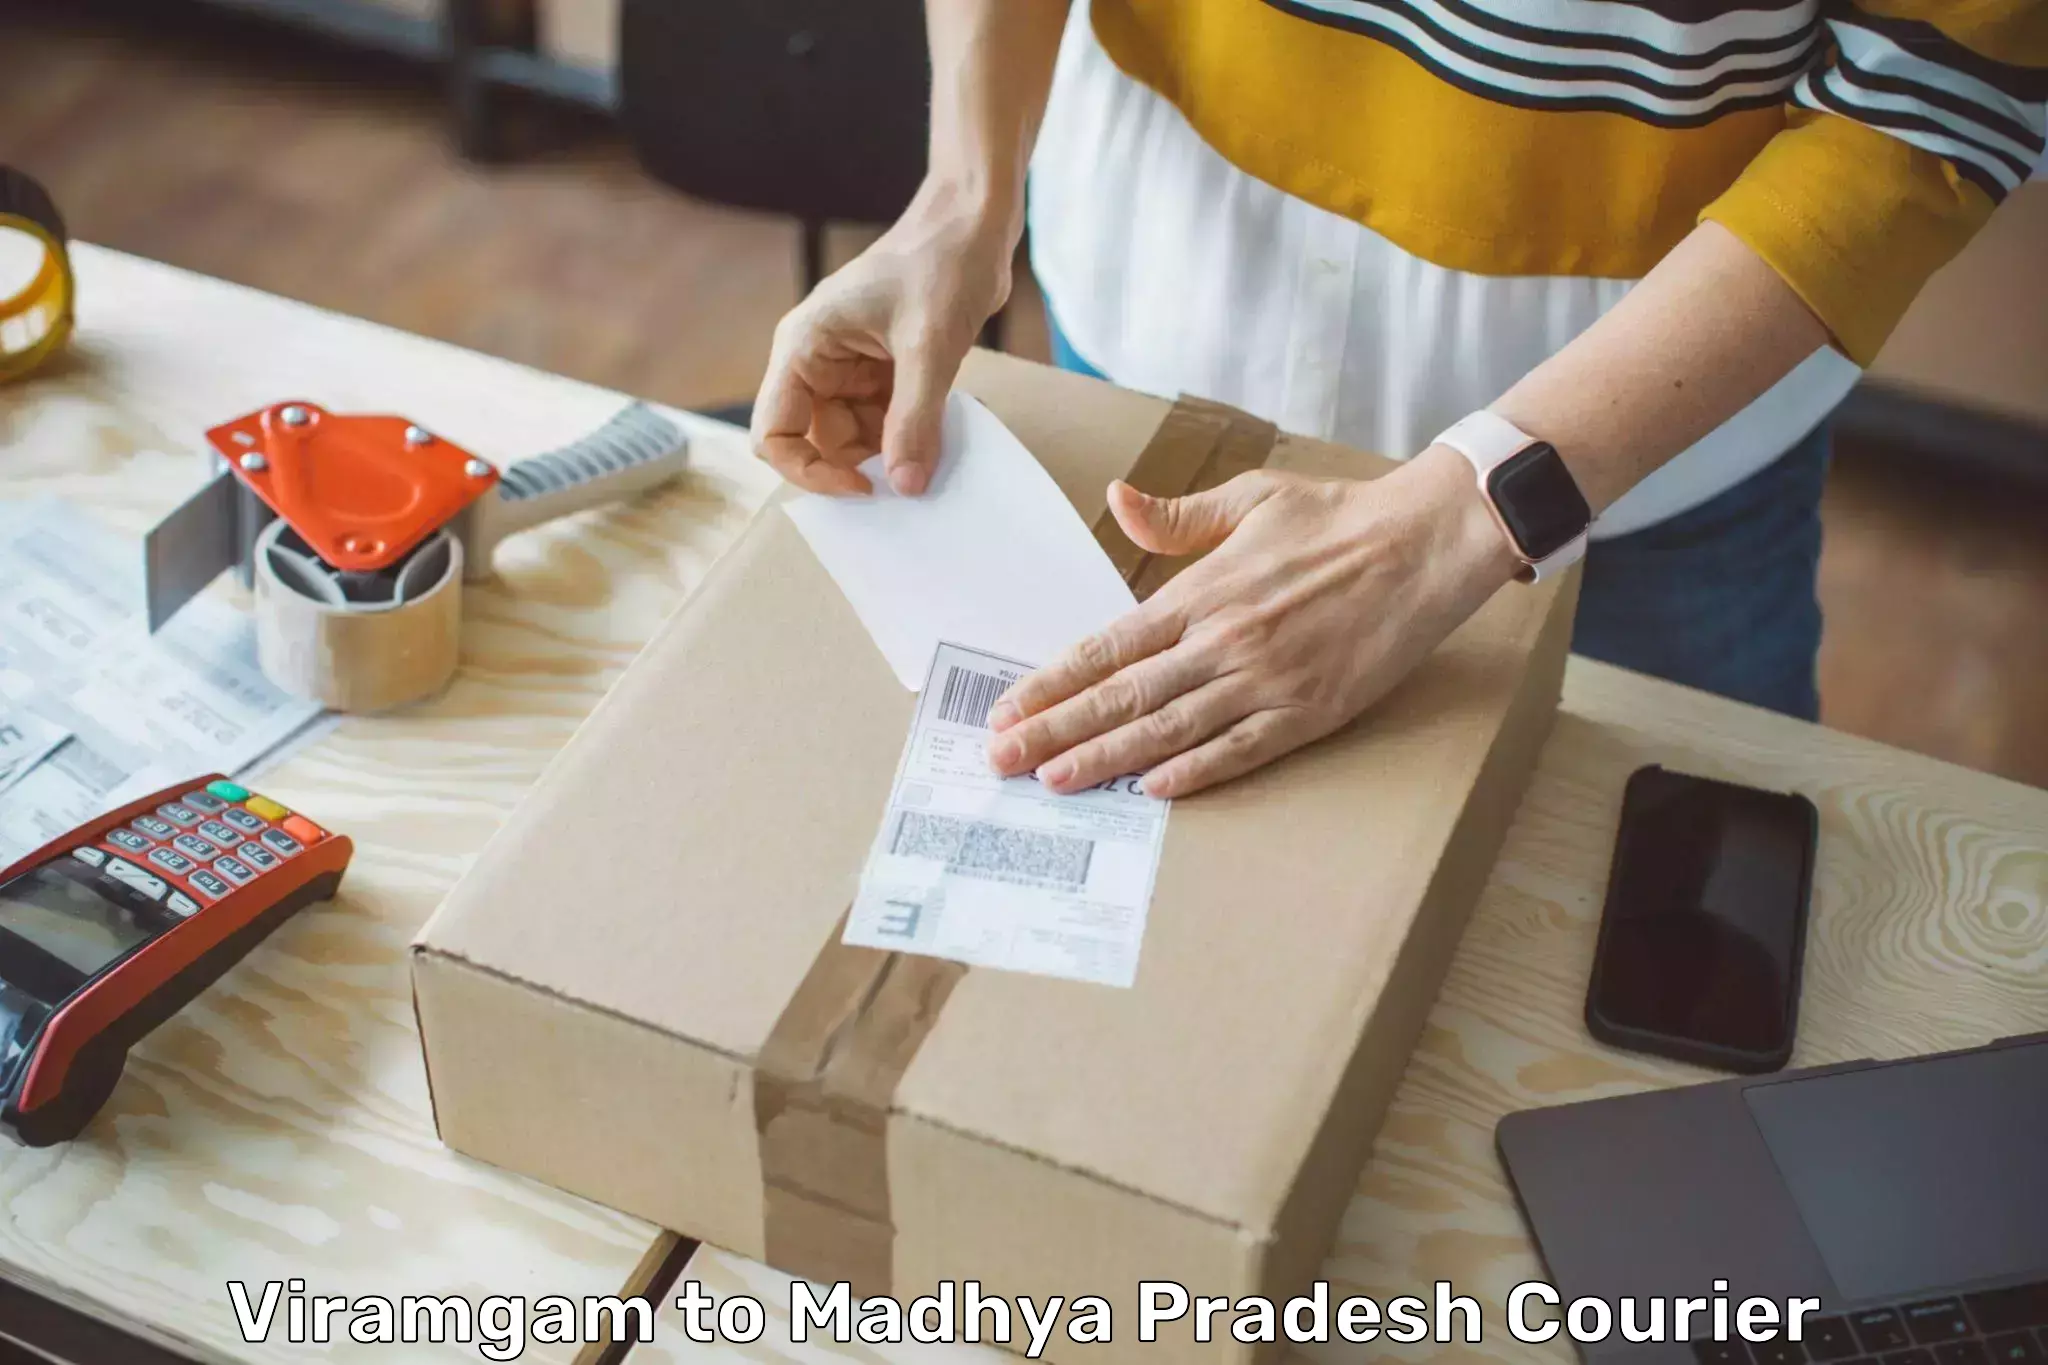 Lightweight parcel options Viramgam to Madhya Pradesh